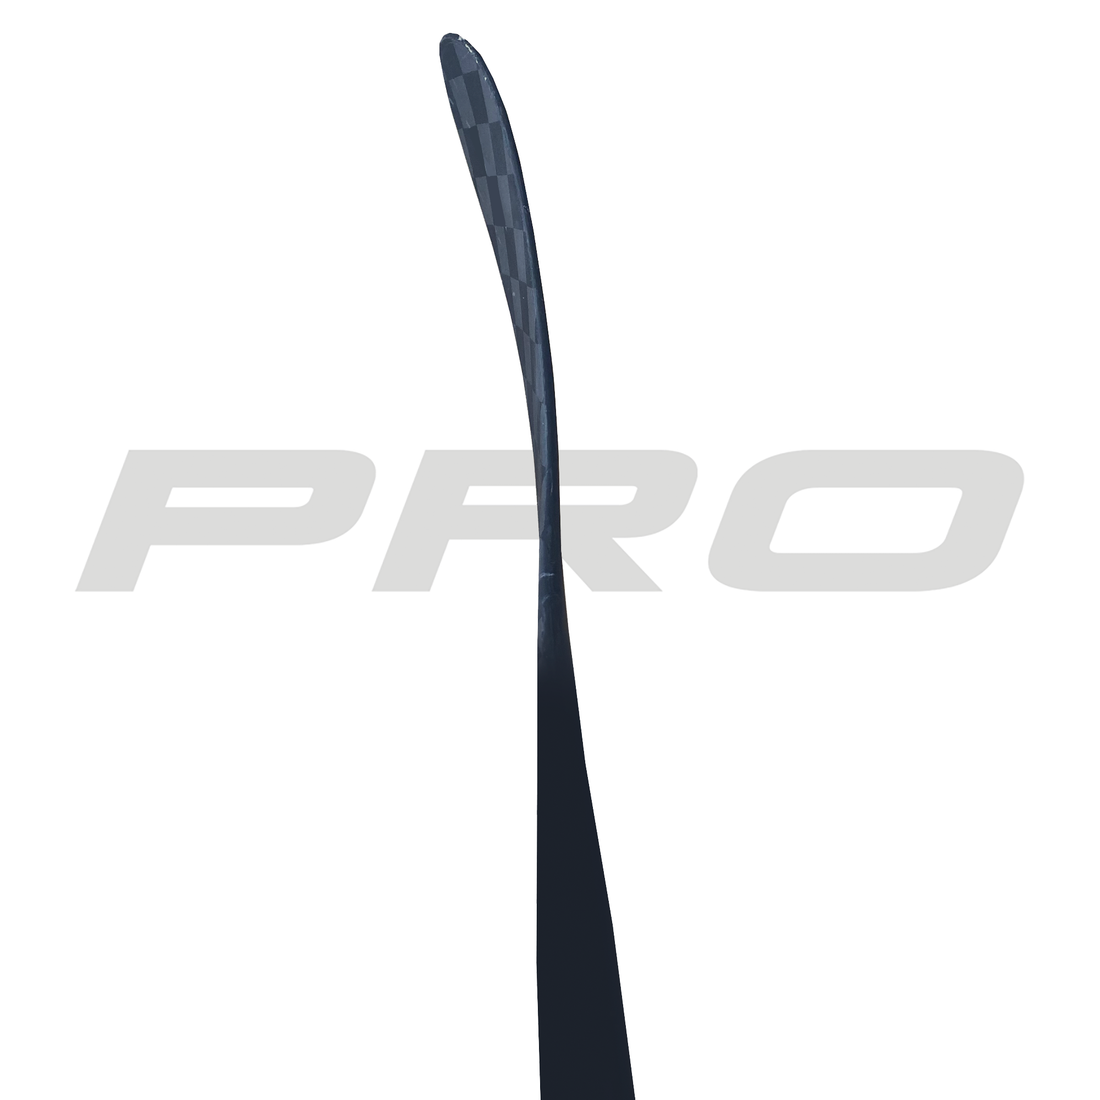 PRO9292 (ST: Kuznetsov Pro) - Third Line (425 G) - Pro Stock Hockey Stick - Right